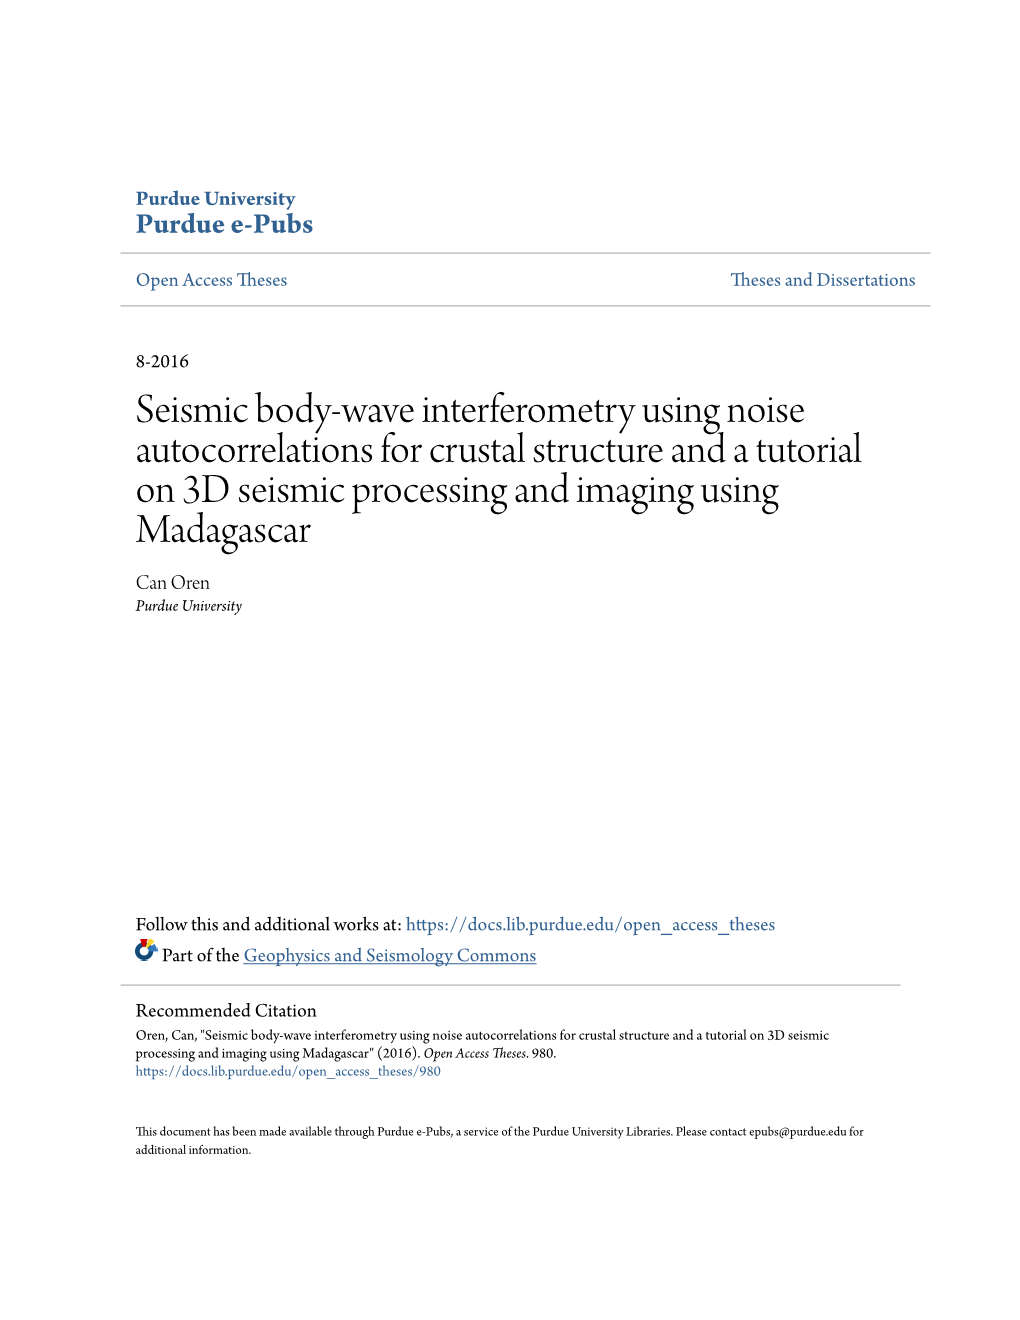 Seismic Body-Wave Interferometry Using Noise Autocorrelations For